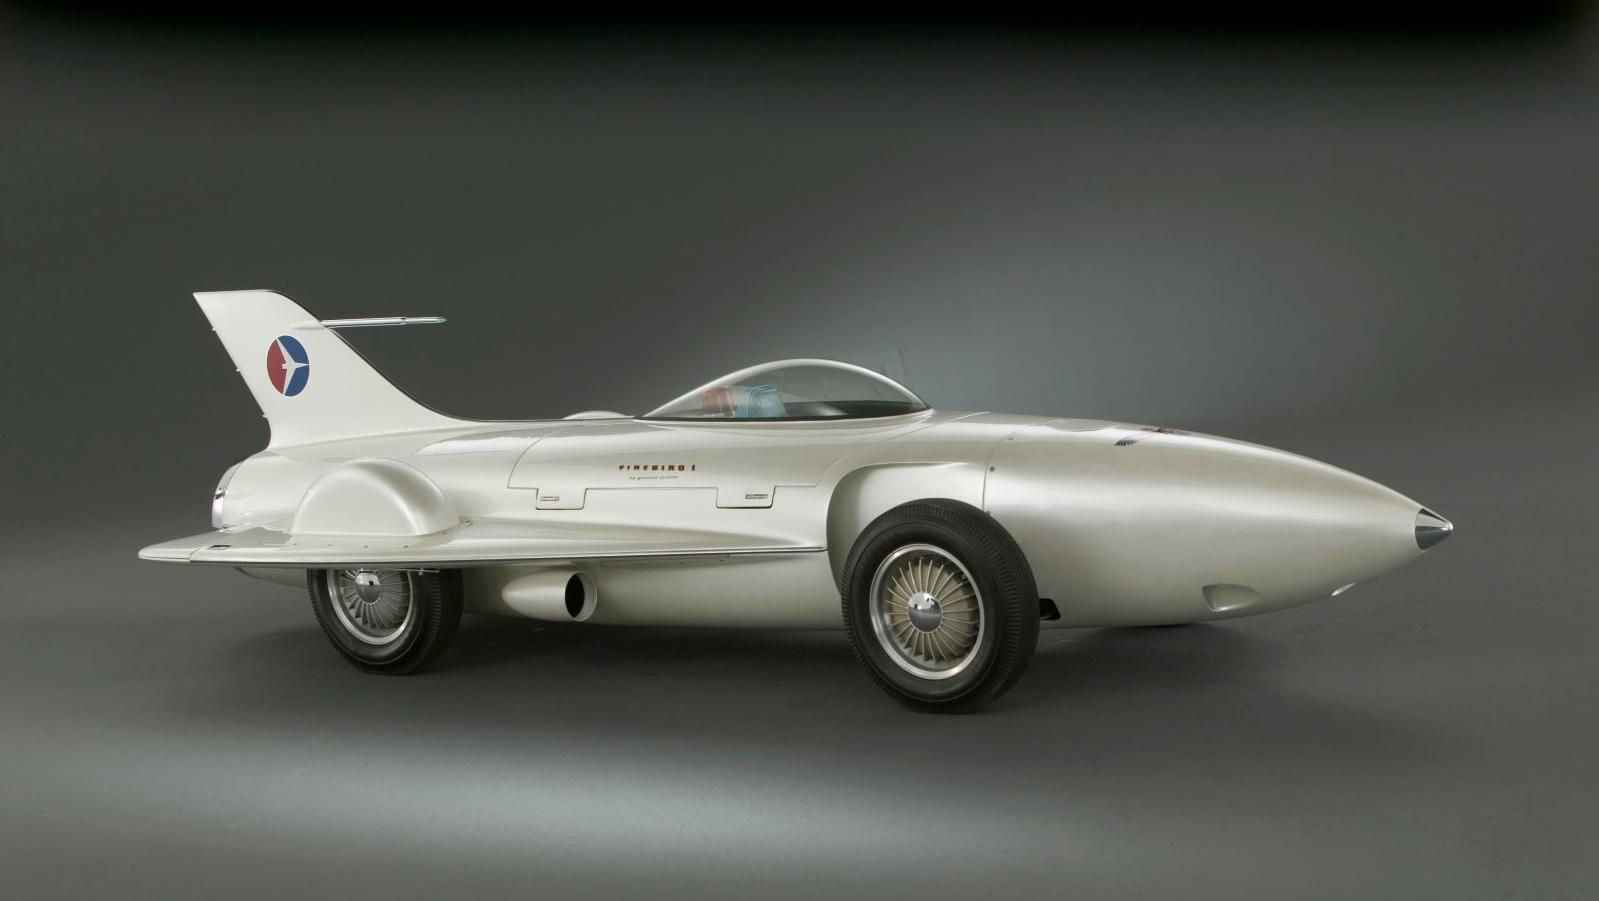 General Motors, Firebird I (XP-21), 1953.© General Motors Company, LLC Cars: Accelerating the Modern World